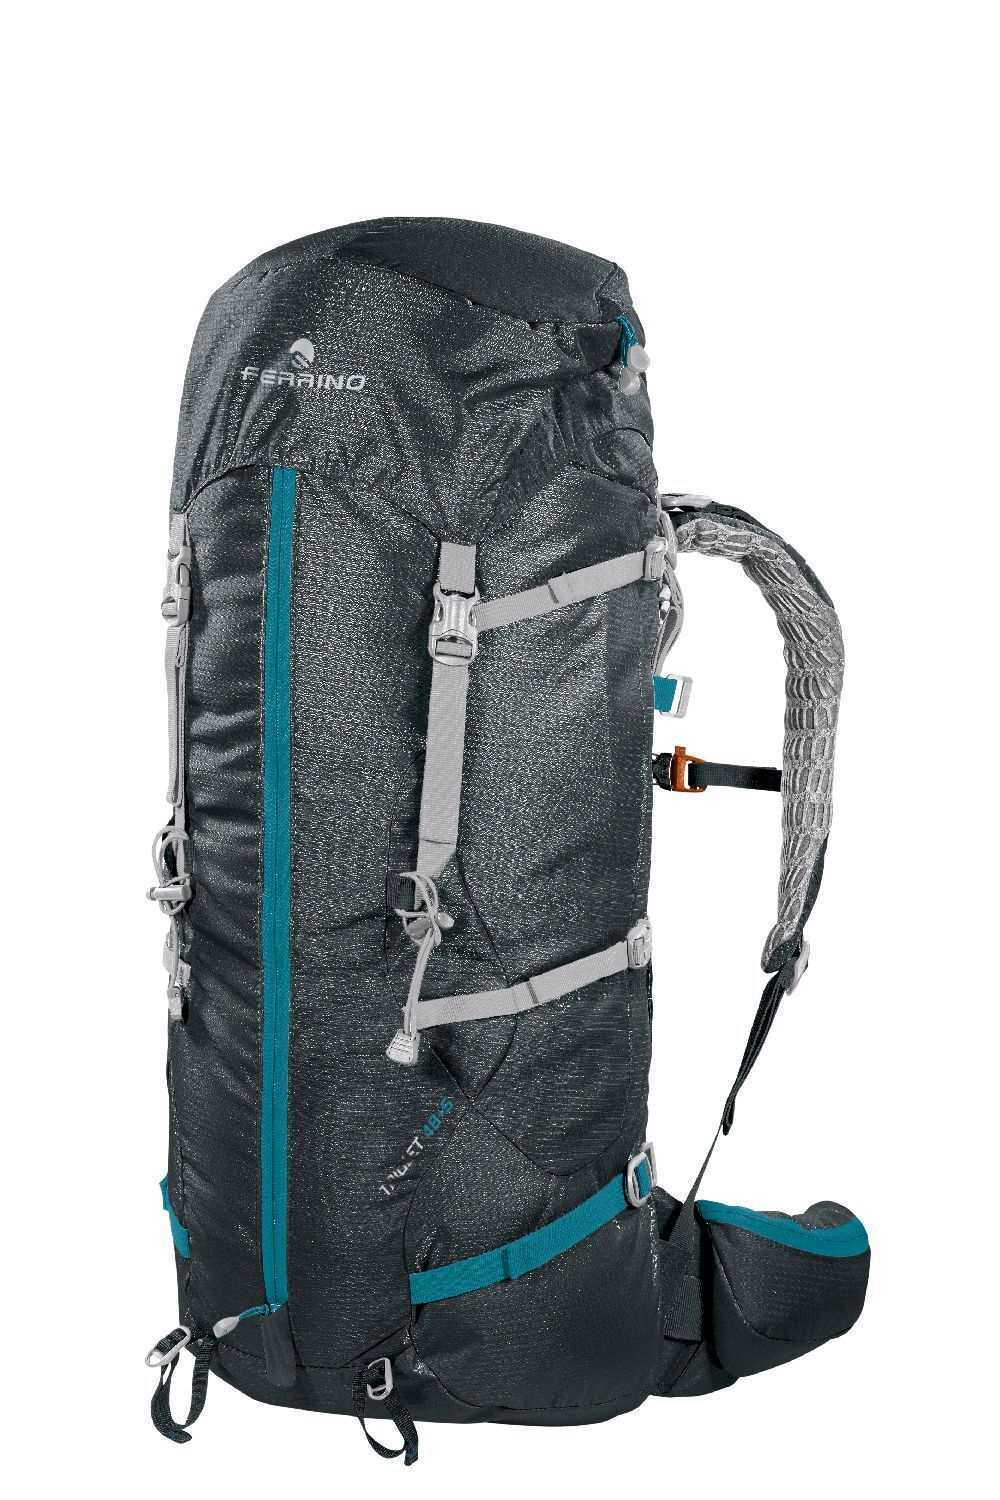 Ferrino Triolet 48+5 - Hiking backpack